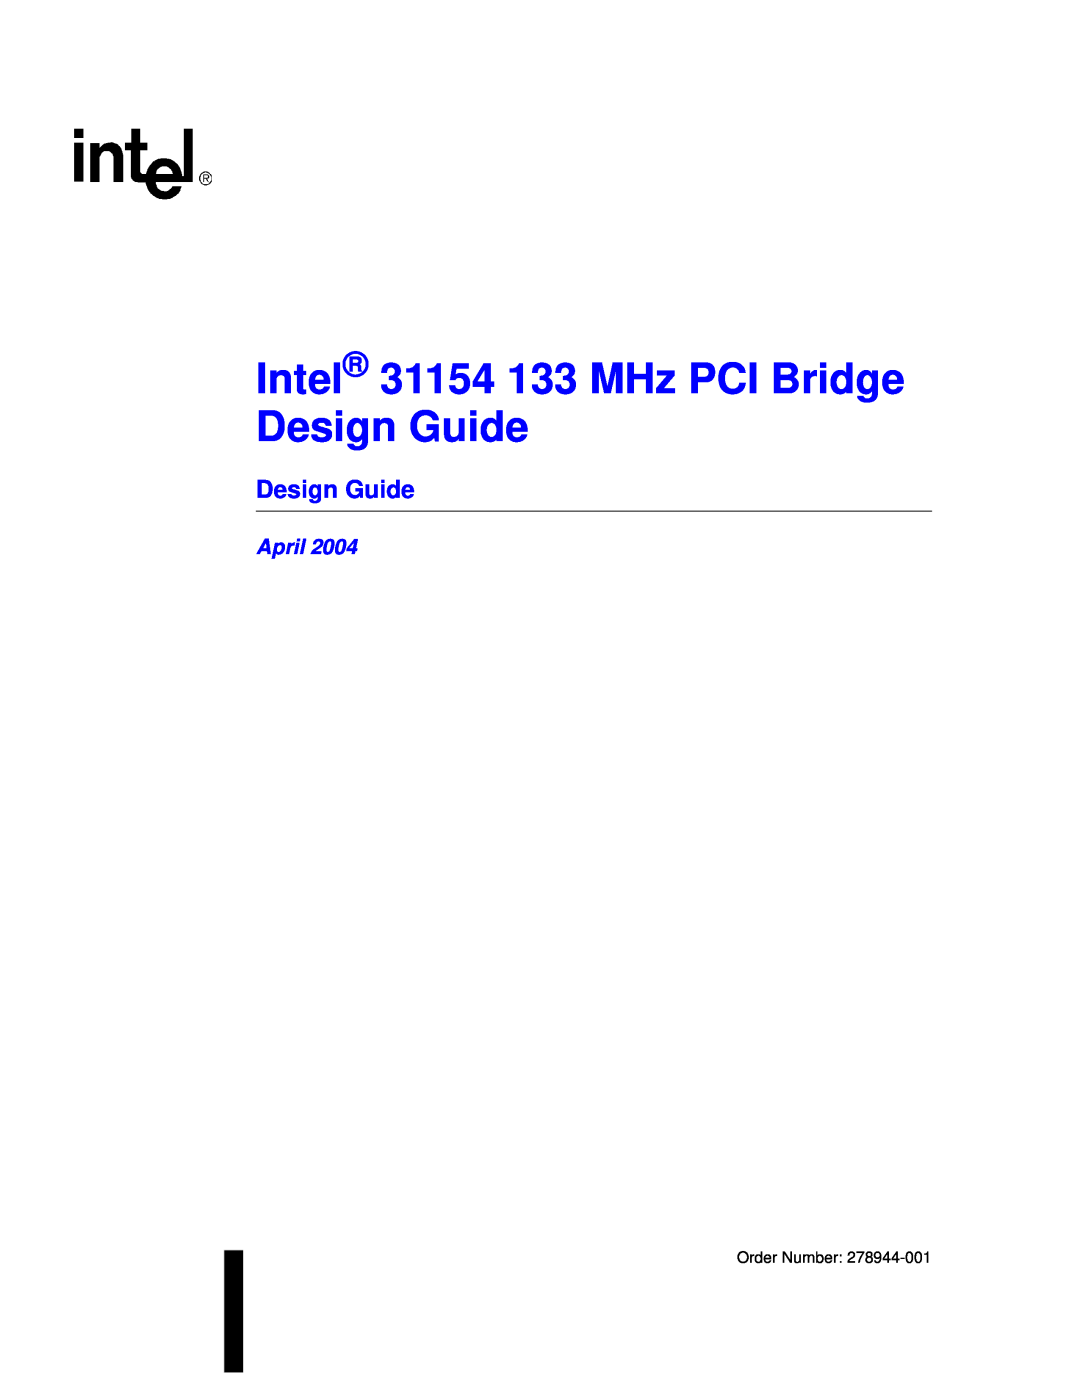 Intel manual Intel 31154 133 MHz PCI Bridge Design Guide, April 